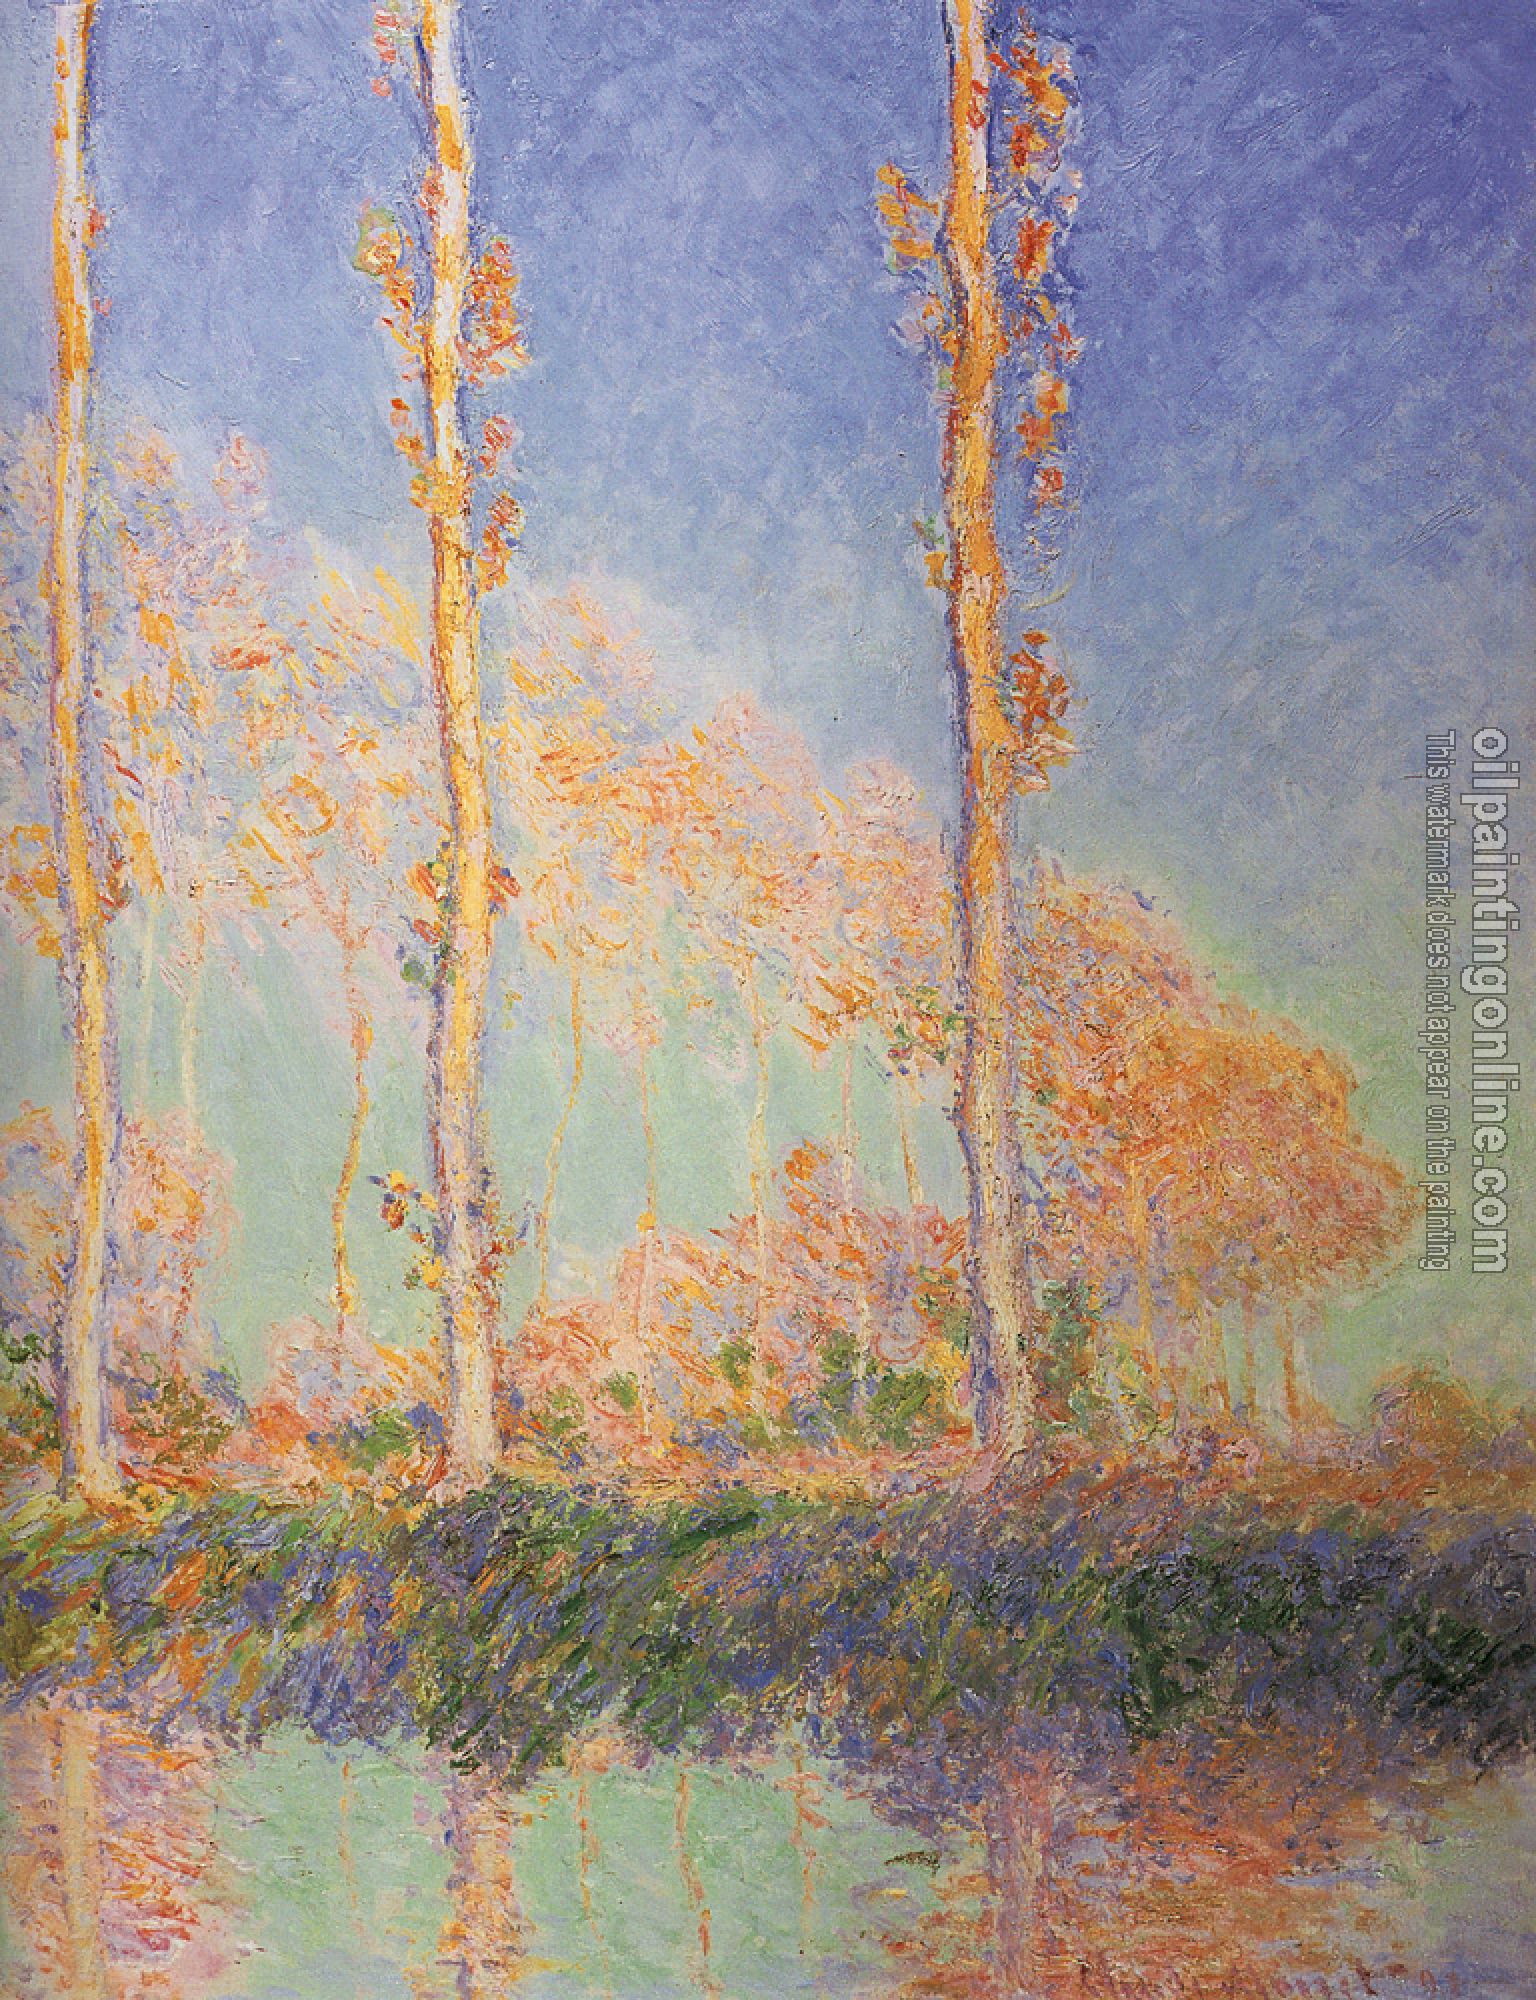 Monet, Claude Oscar - Les Peupliers, trois arbres roses, automne, Translated title: Poplars